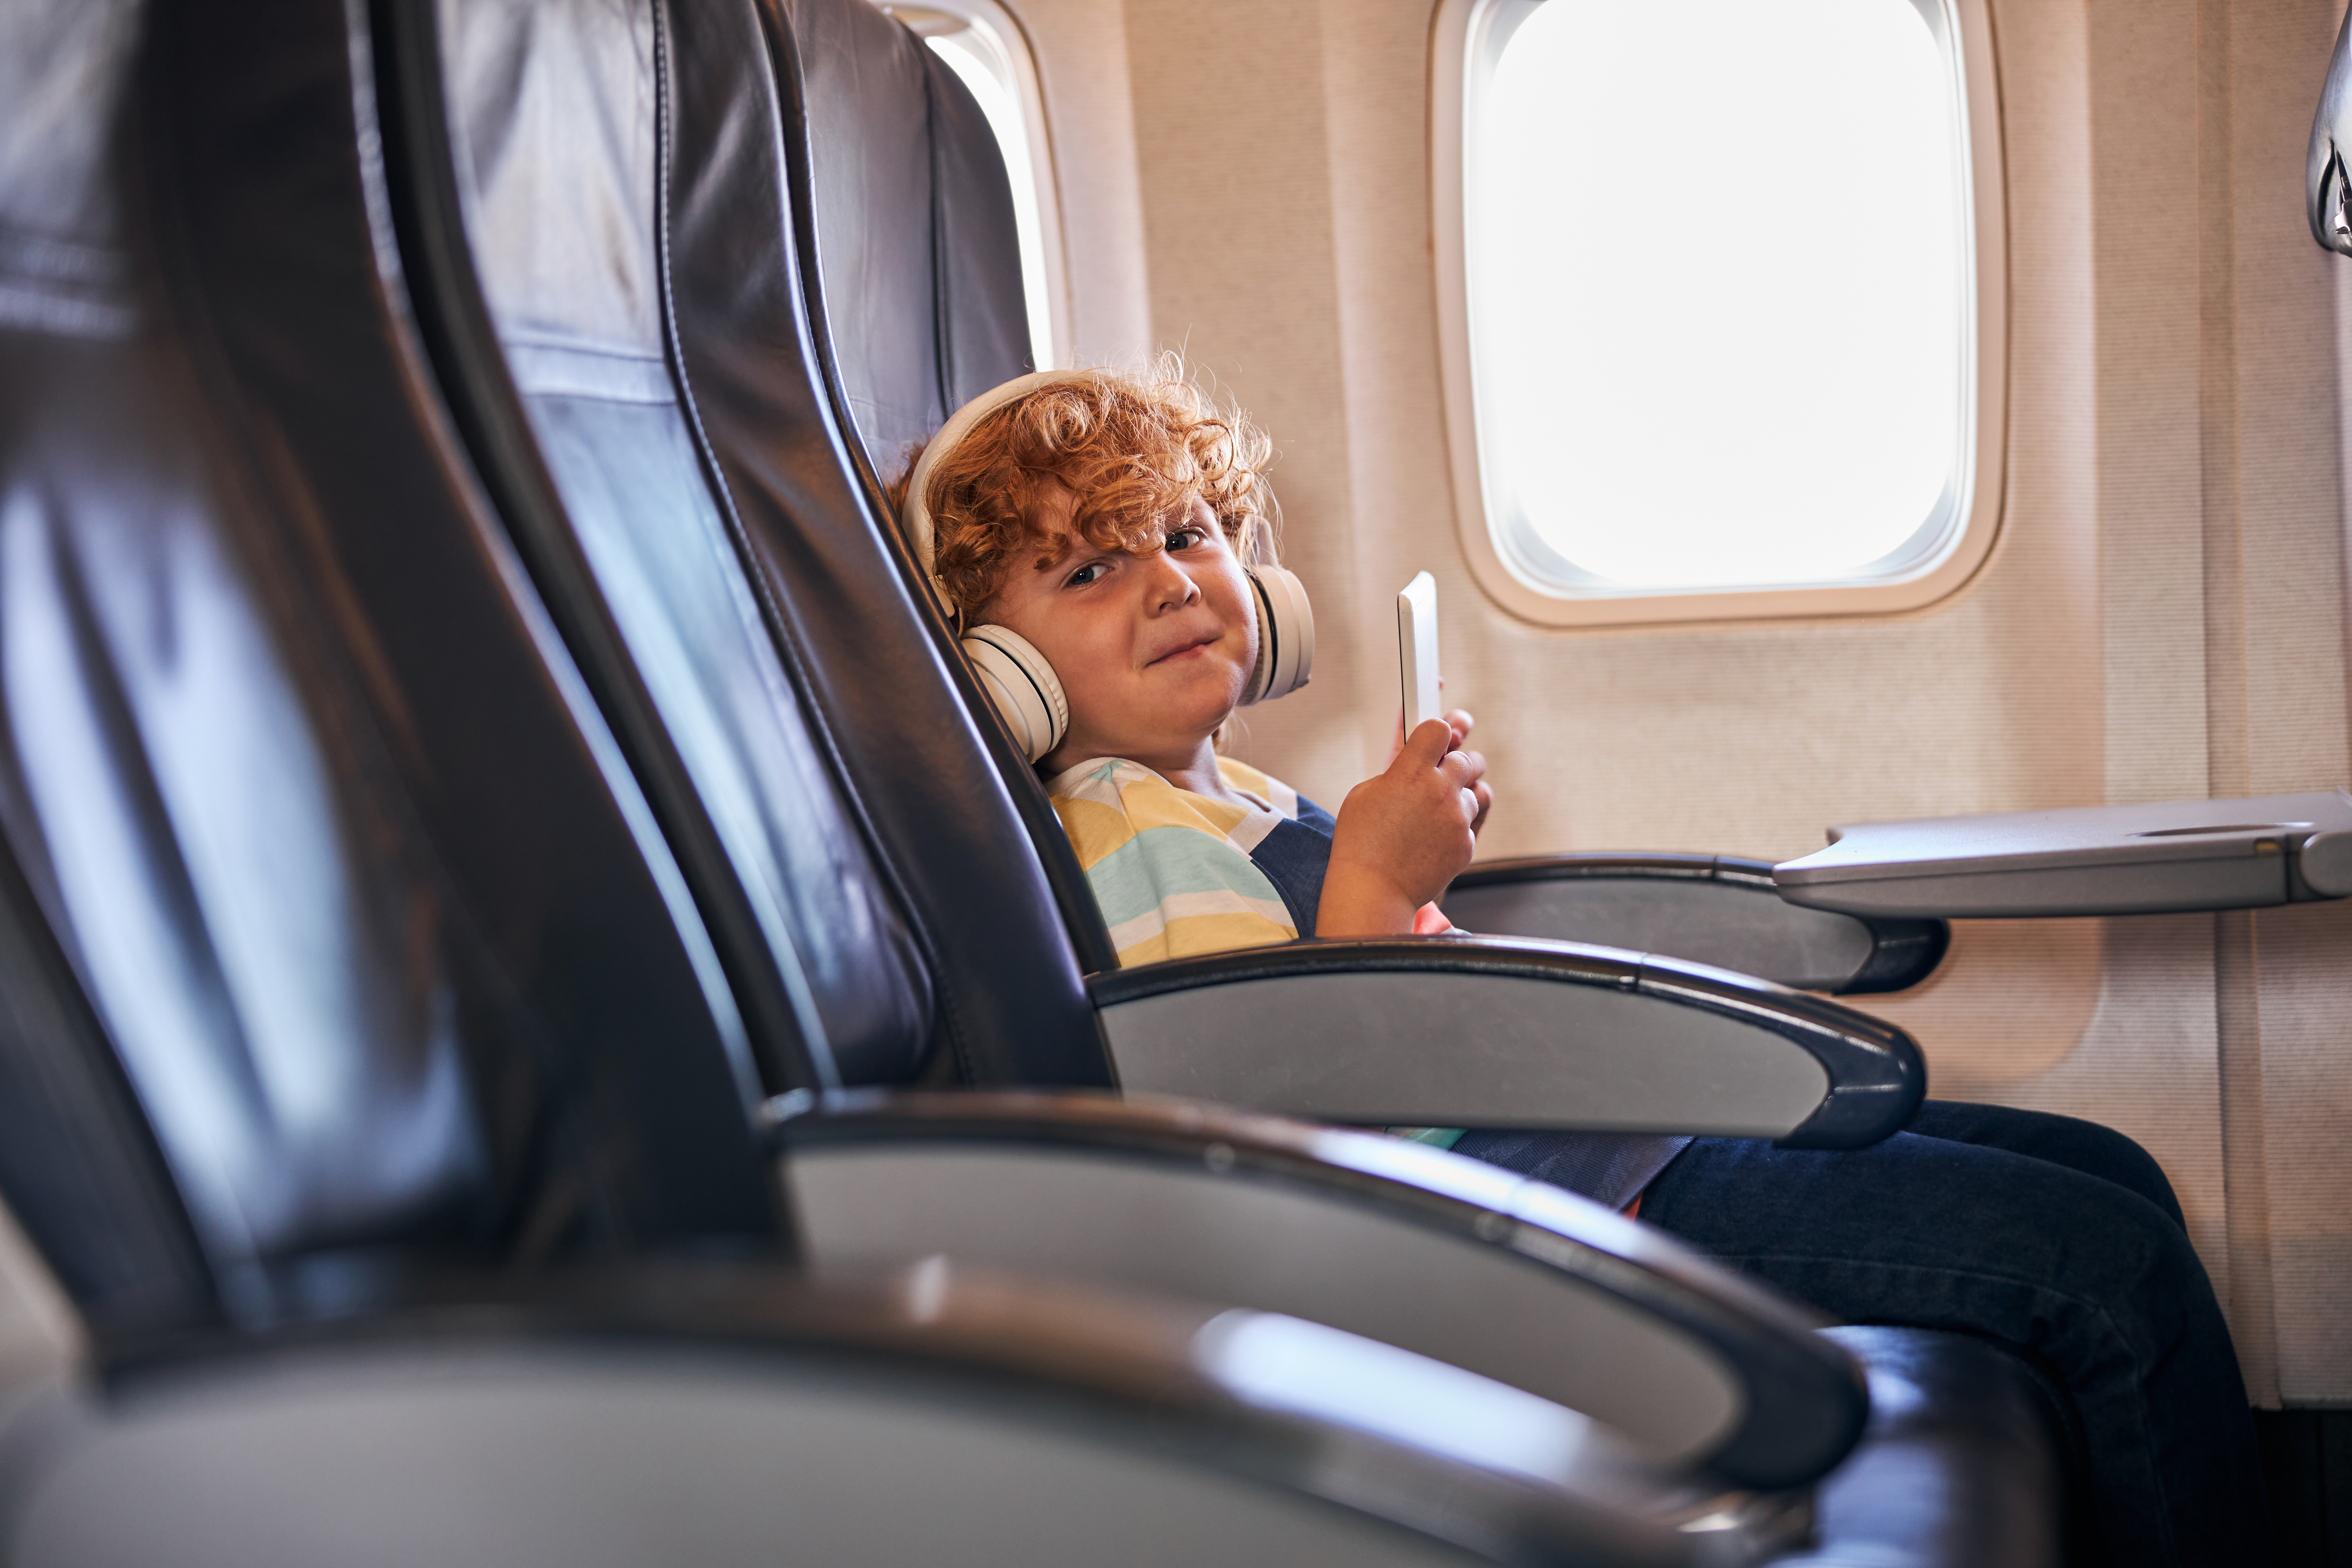 A mischevious child on a plane | Source: Shutterstock